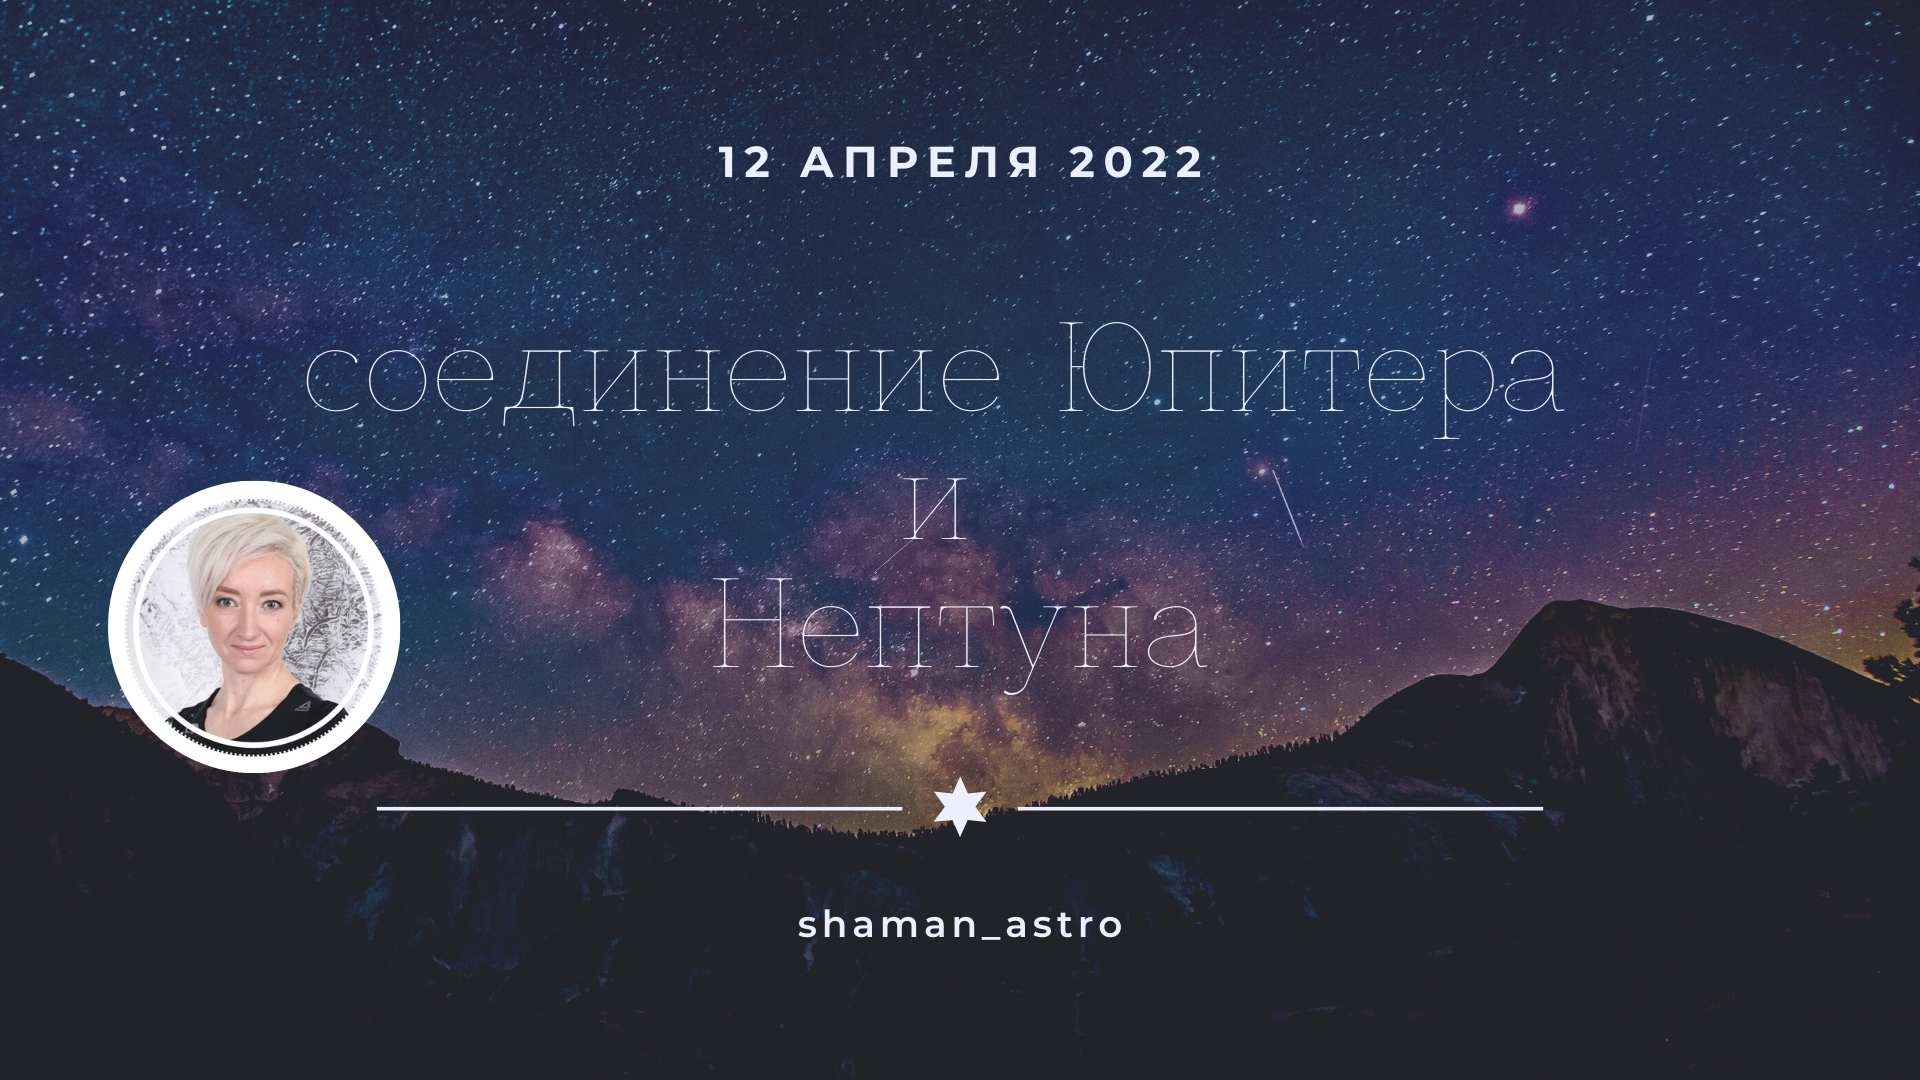 Нептун 2022. Соединение Юпитера и Нептуна. 12 Апреля 2022 соединение Юпитера и Нептуна. Соединение 2022.